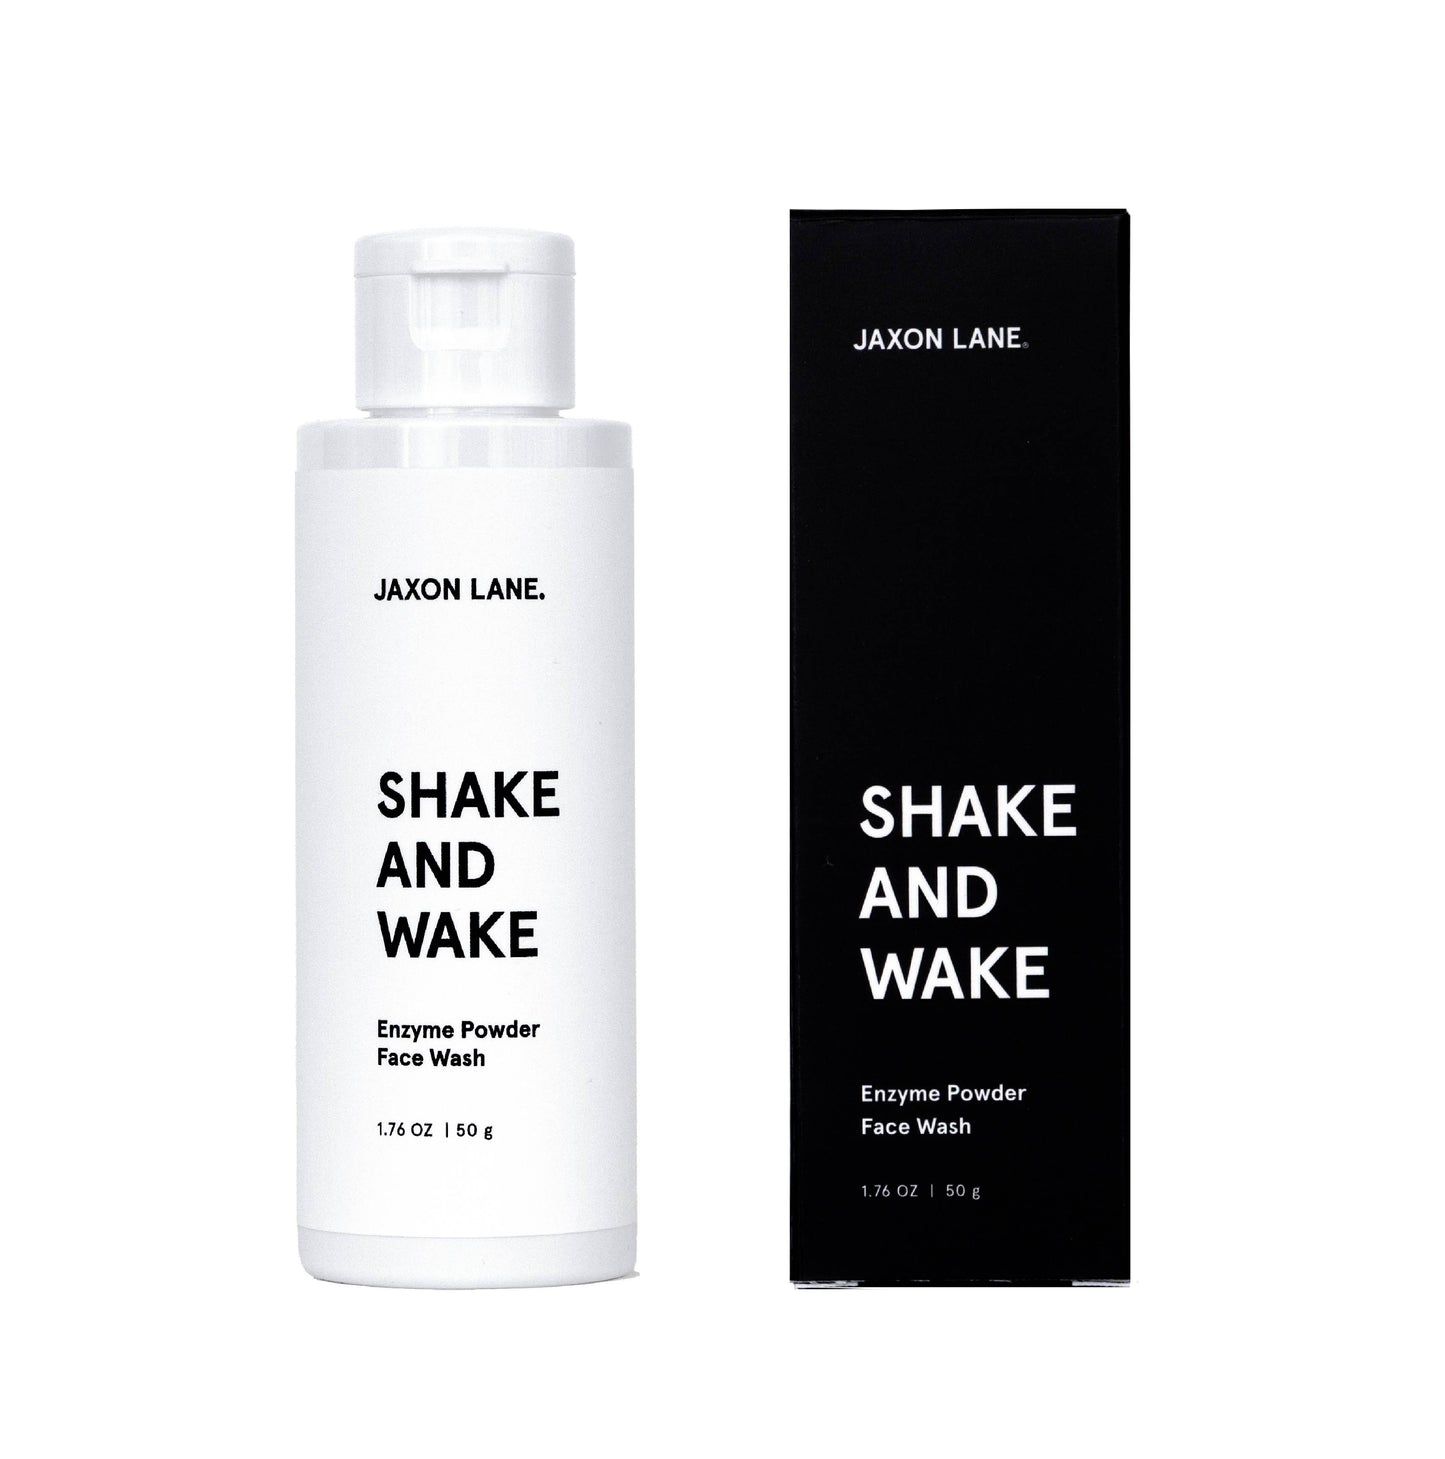 SHAKE AND WAKE - Enzyme Powder Face Wash